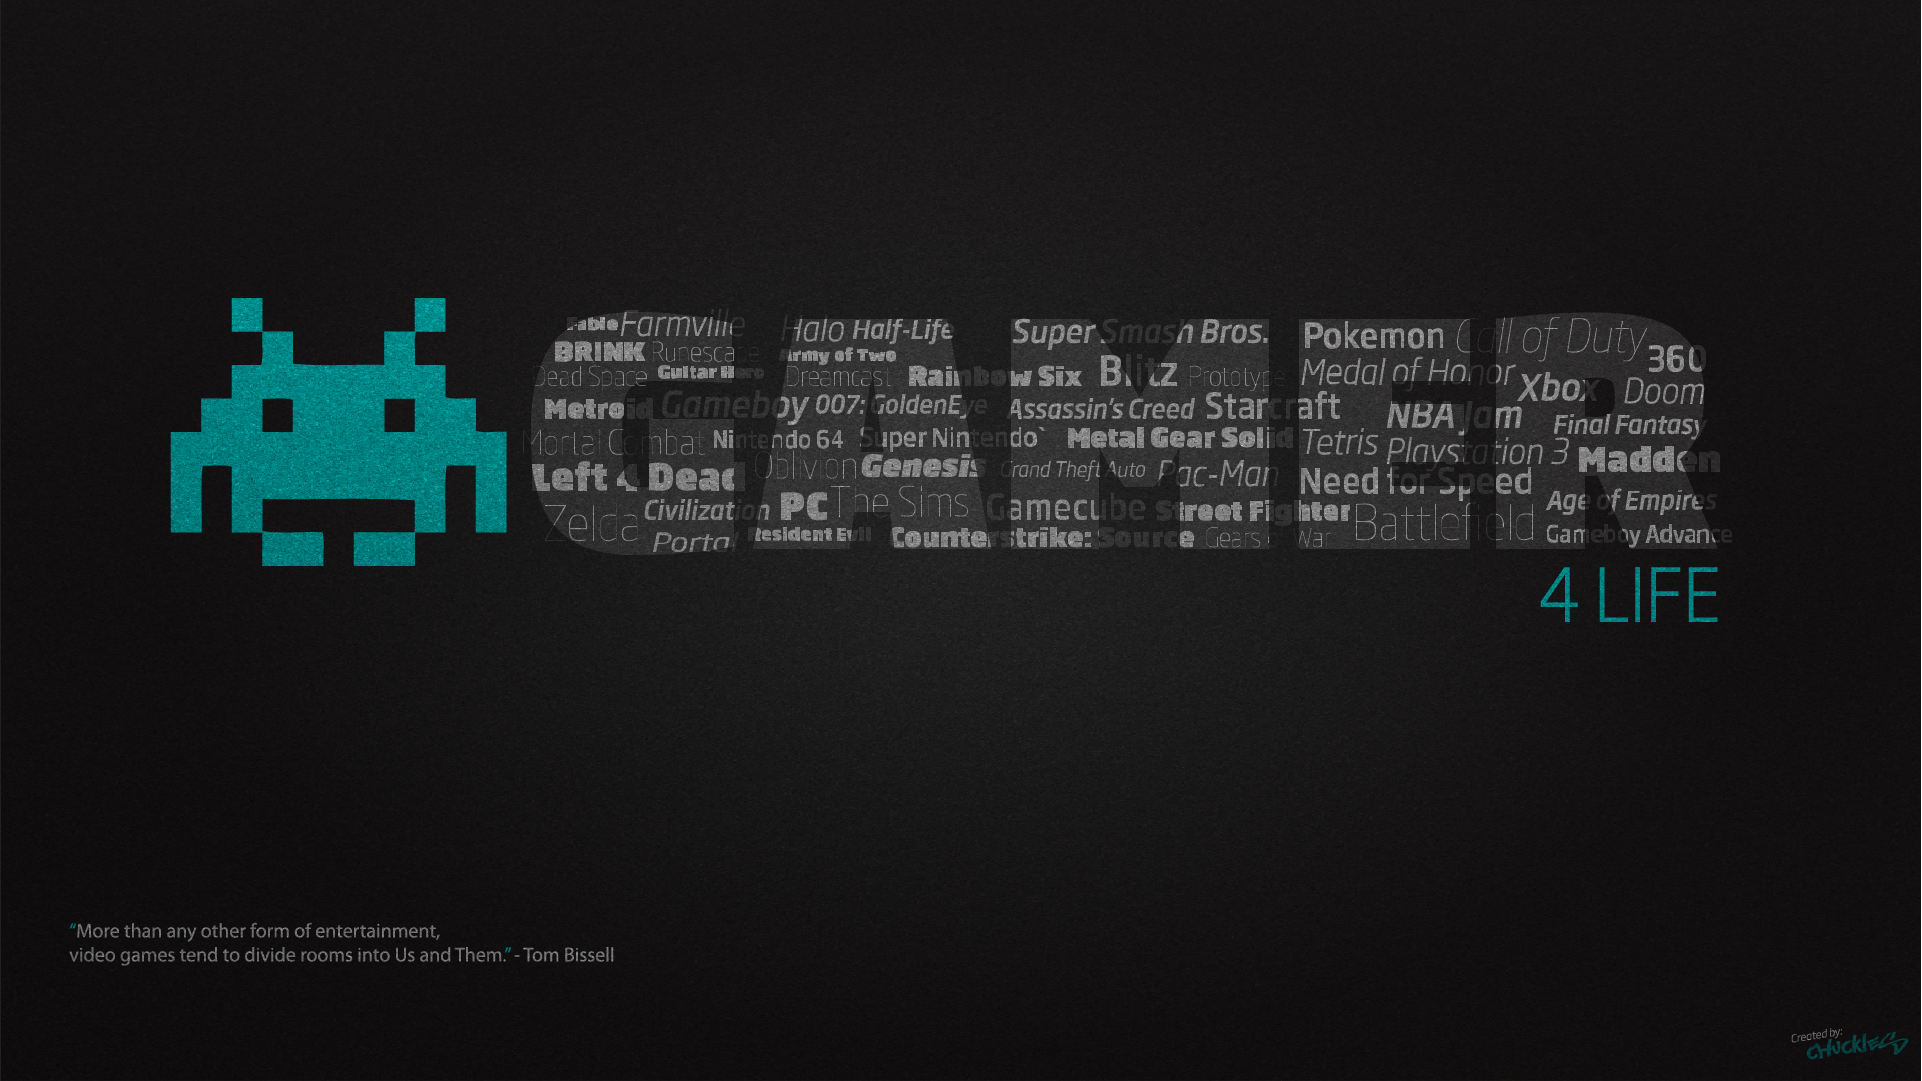 Gamer for Life Desktop Wallpaper by ChucklesMedia on DeviantArt